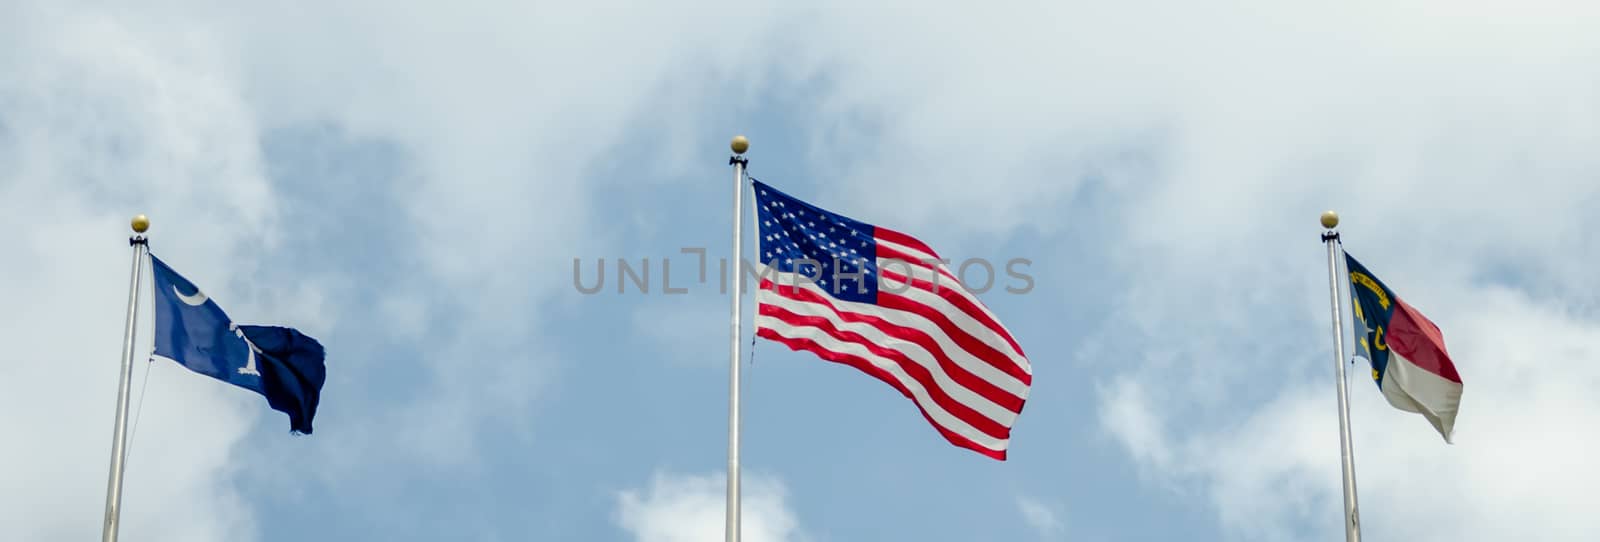 south carolina, north carolina and united states of america flag